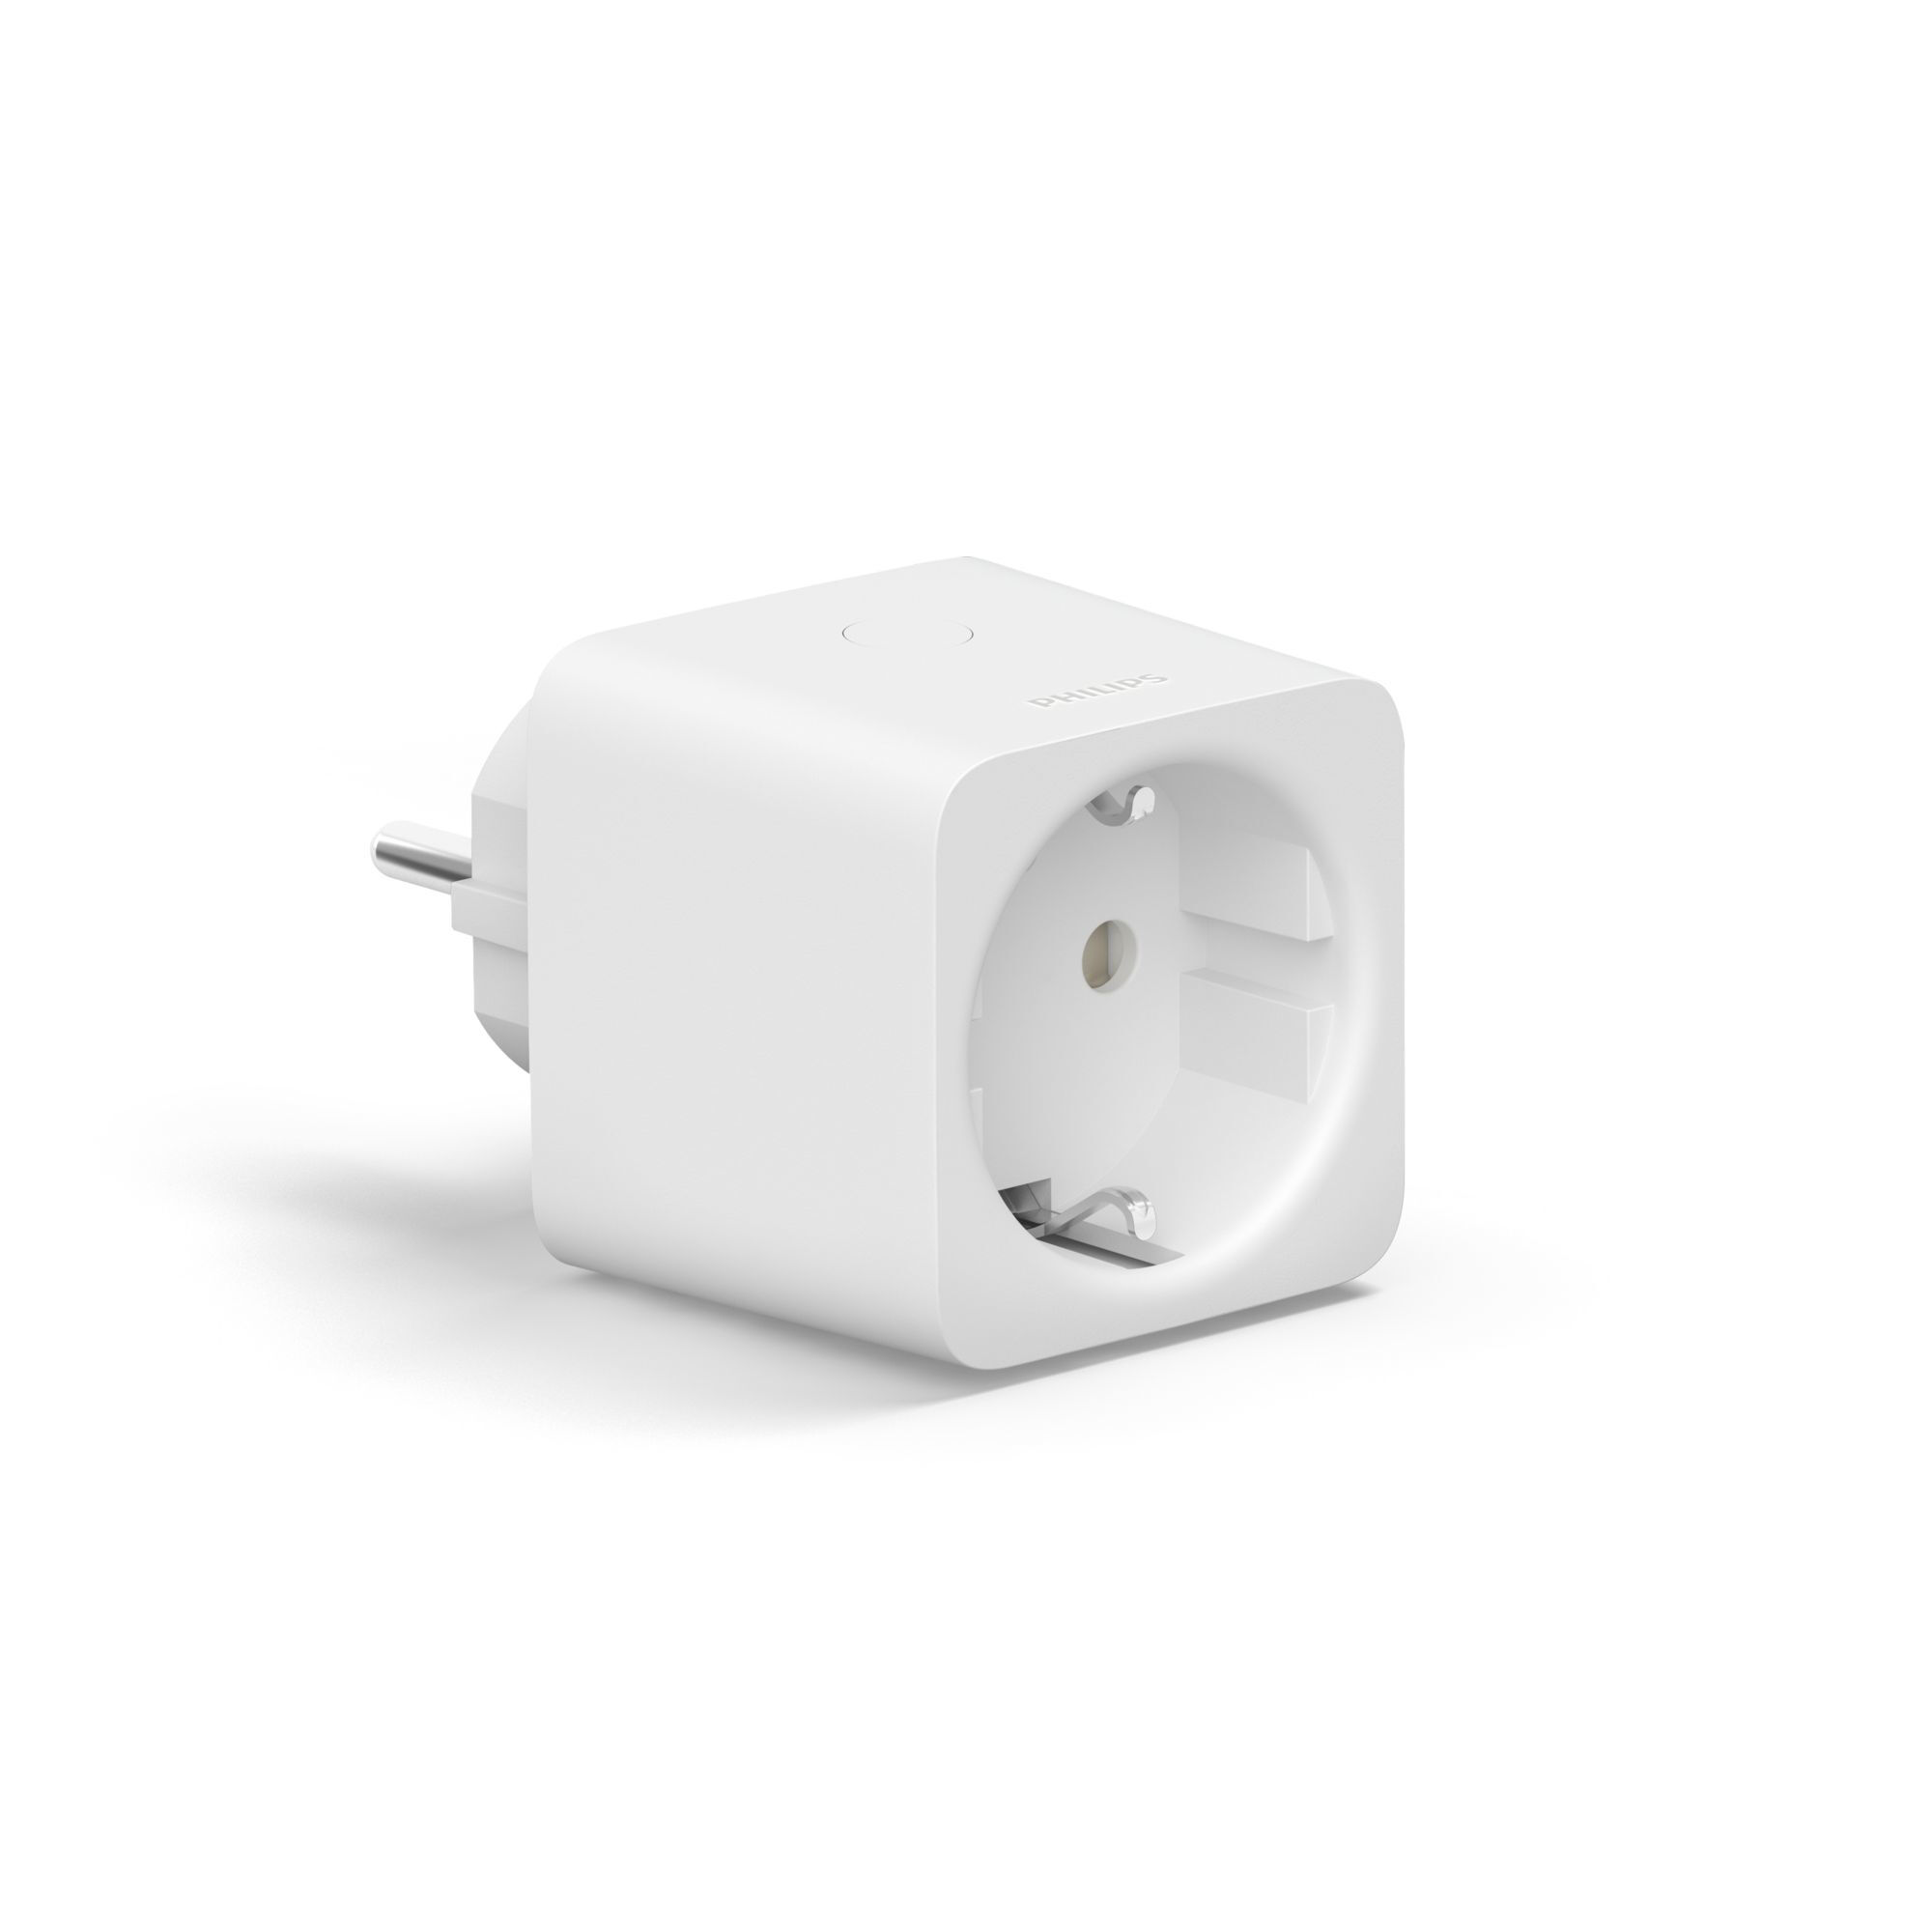 Philips Hue Smart Plug controllo tramite Bluetooth, compatibile con Alexa, Google Home e Apple HomeKit